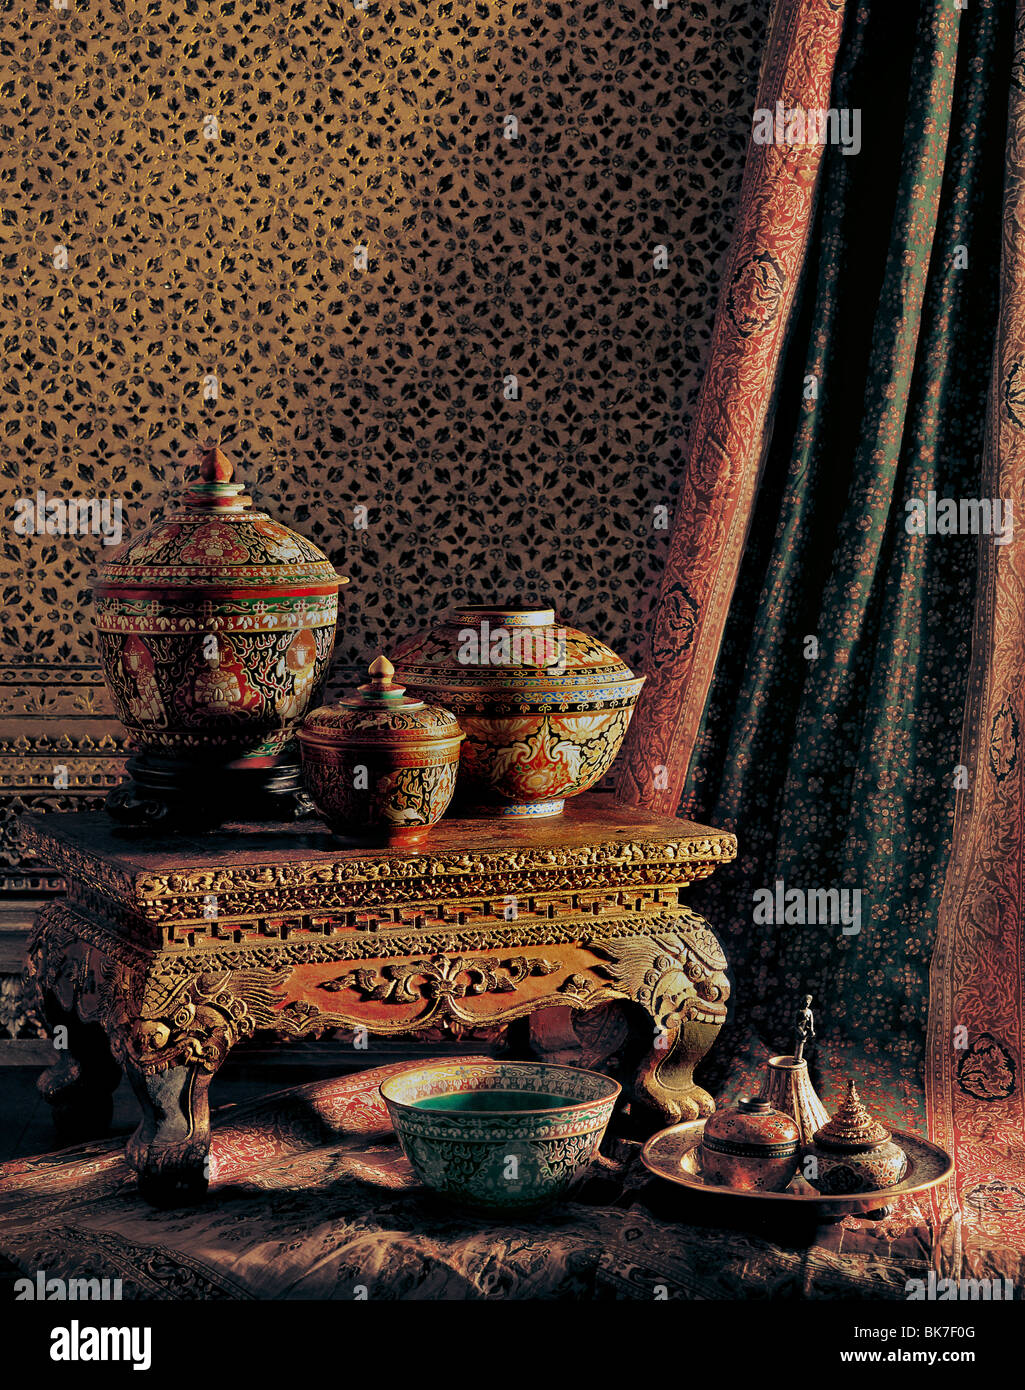 Bencharong mercanzia dal periodo Ayutthaya, classico thailandese mobili e tessuti, Prasat Museum, Bangkok, Thailandia Foto Stock